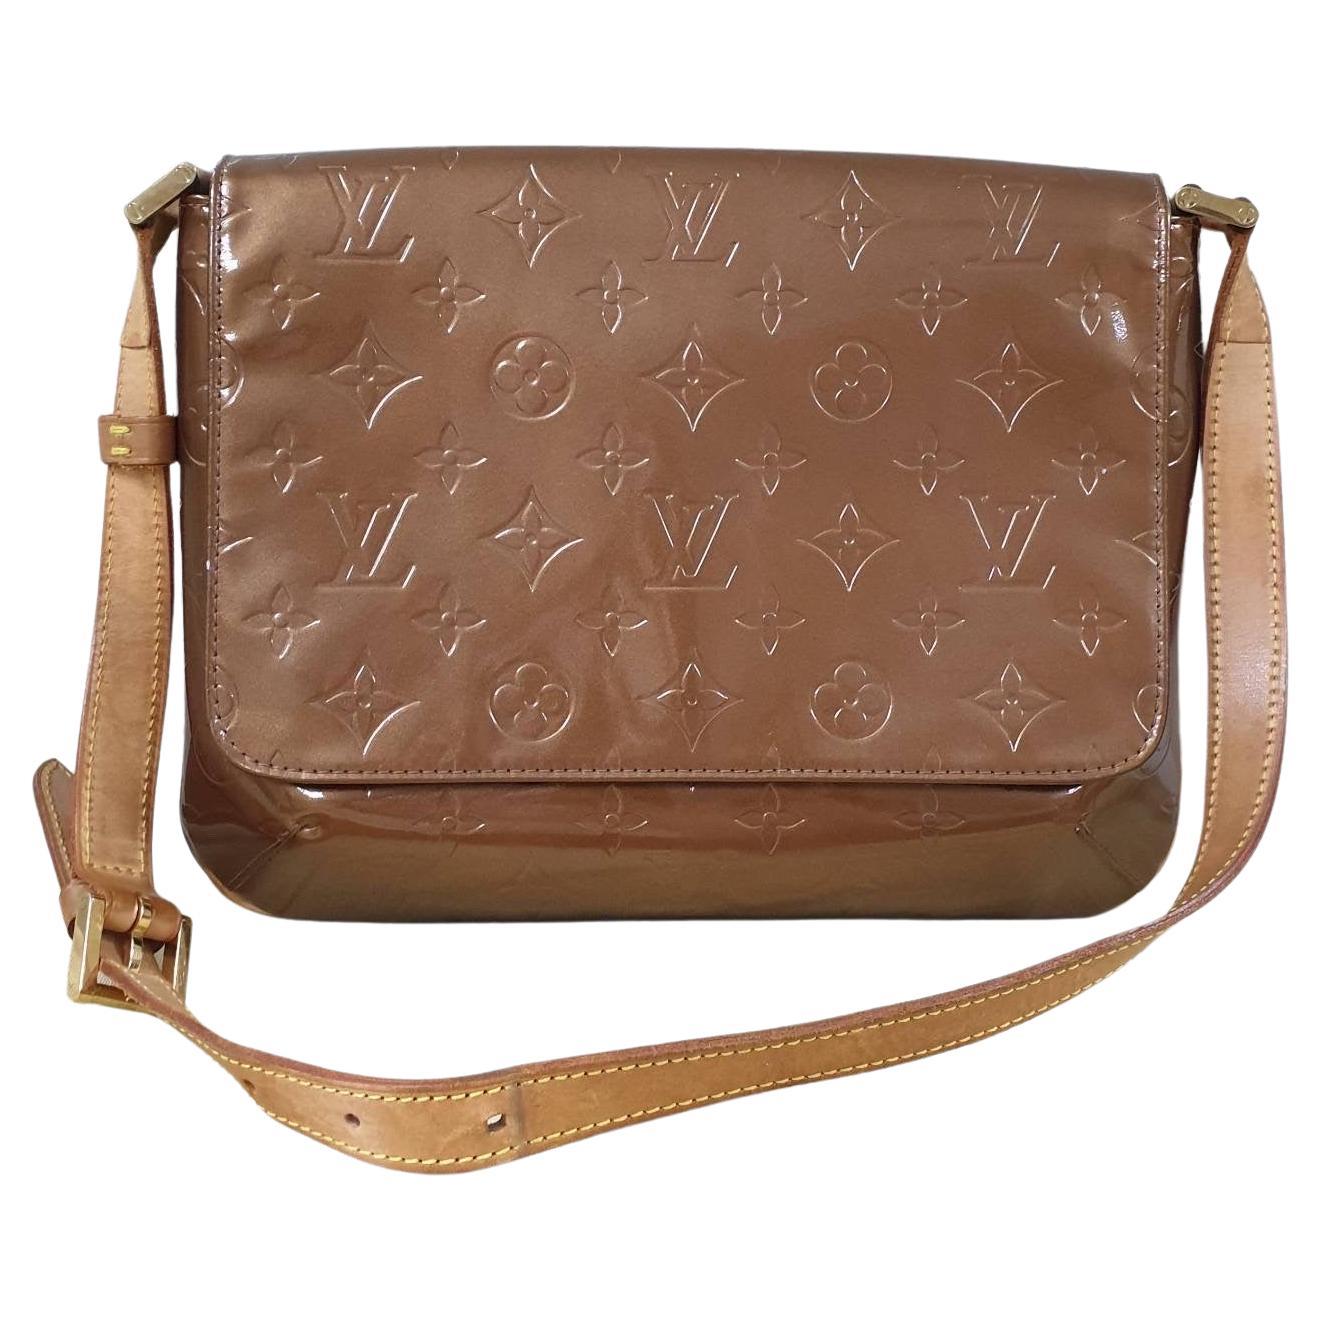 CarryAll PM Bag  Luxury Shoulder Bags and CrossBody Bags  Handbags   Women M46203  LOUIS VUITTON